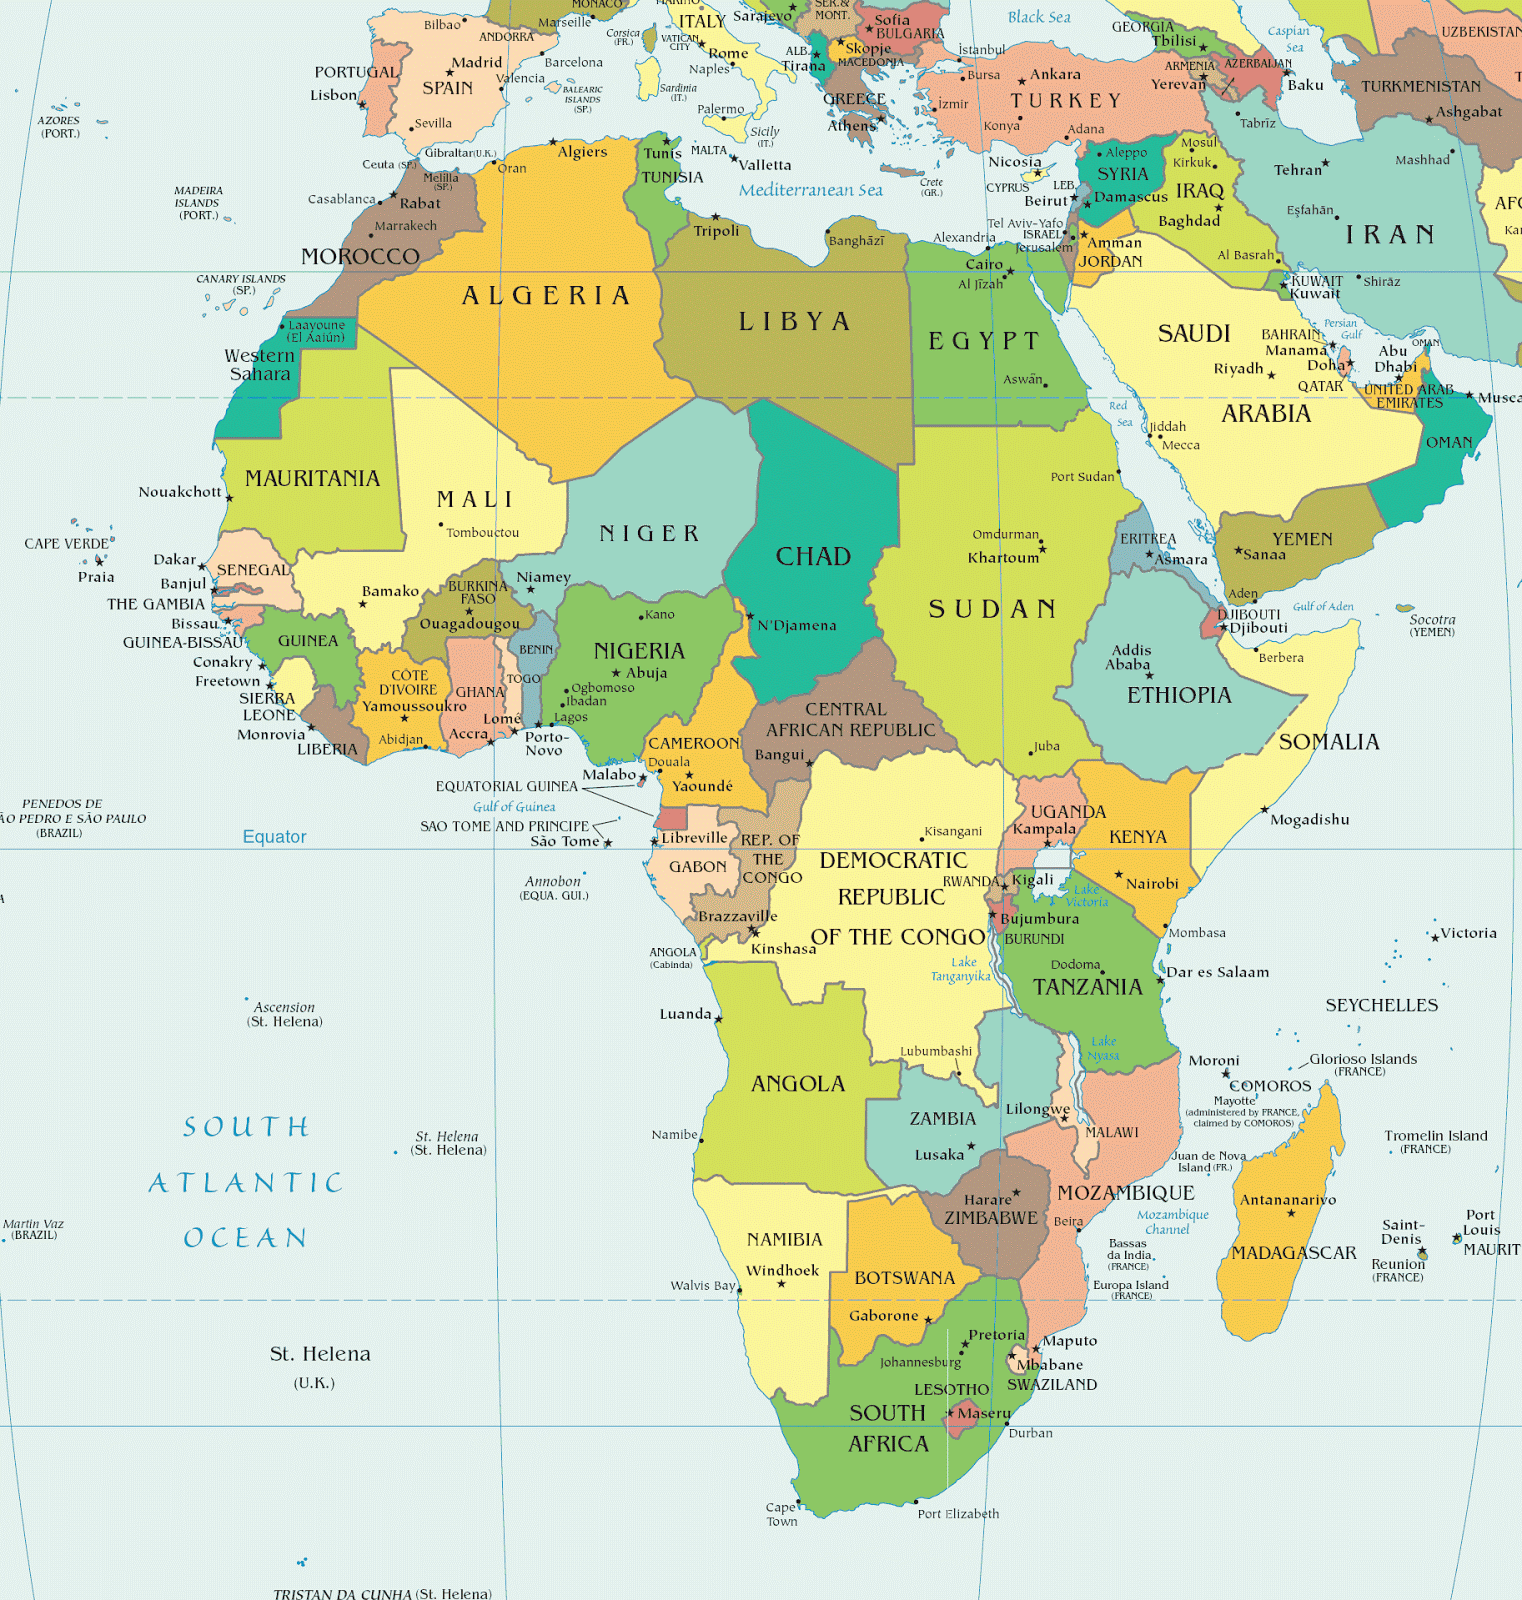 Descargar Mapa De Africa Mapa Las Regiones Africa Mapa Africa Images